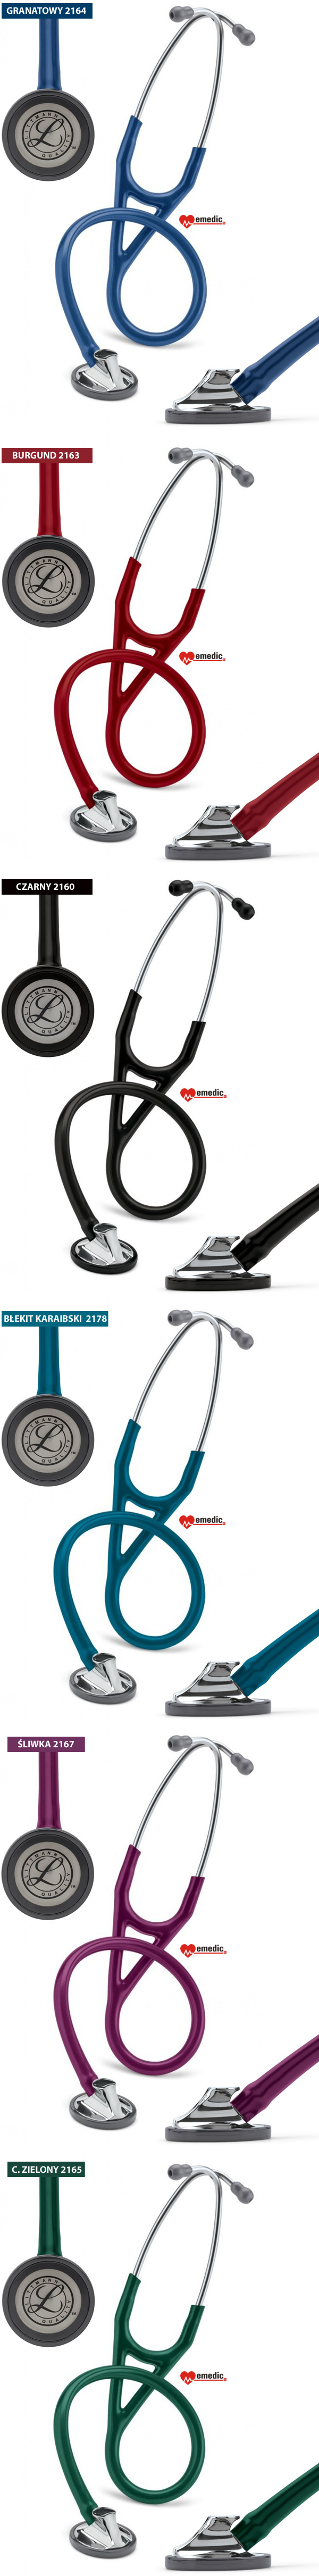 Stetoskop 3M Littmann Master Cardiology - kolorystyka